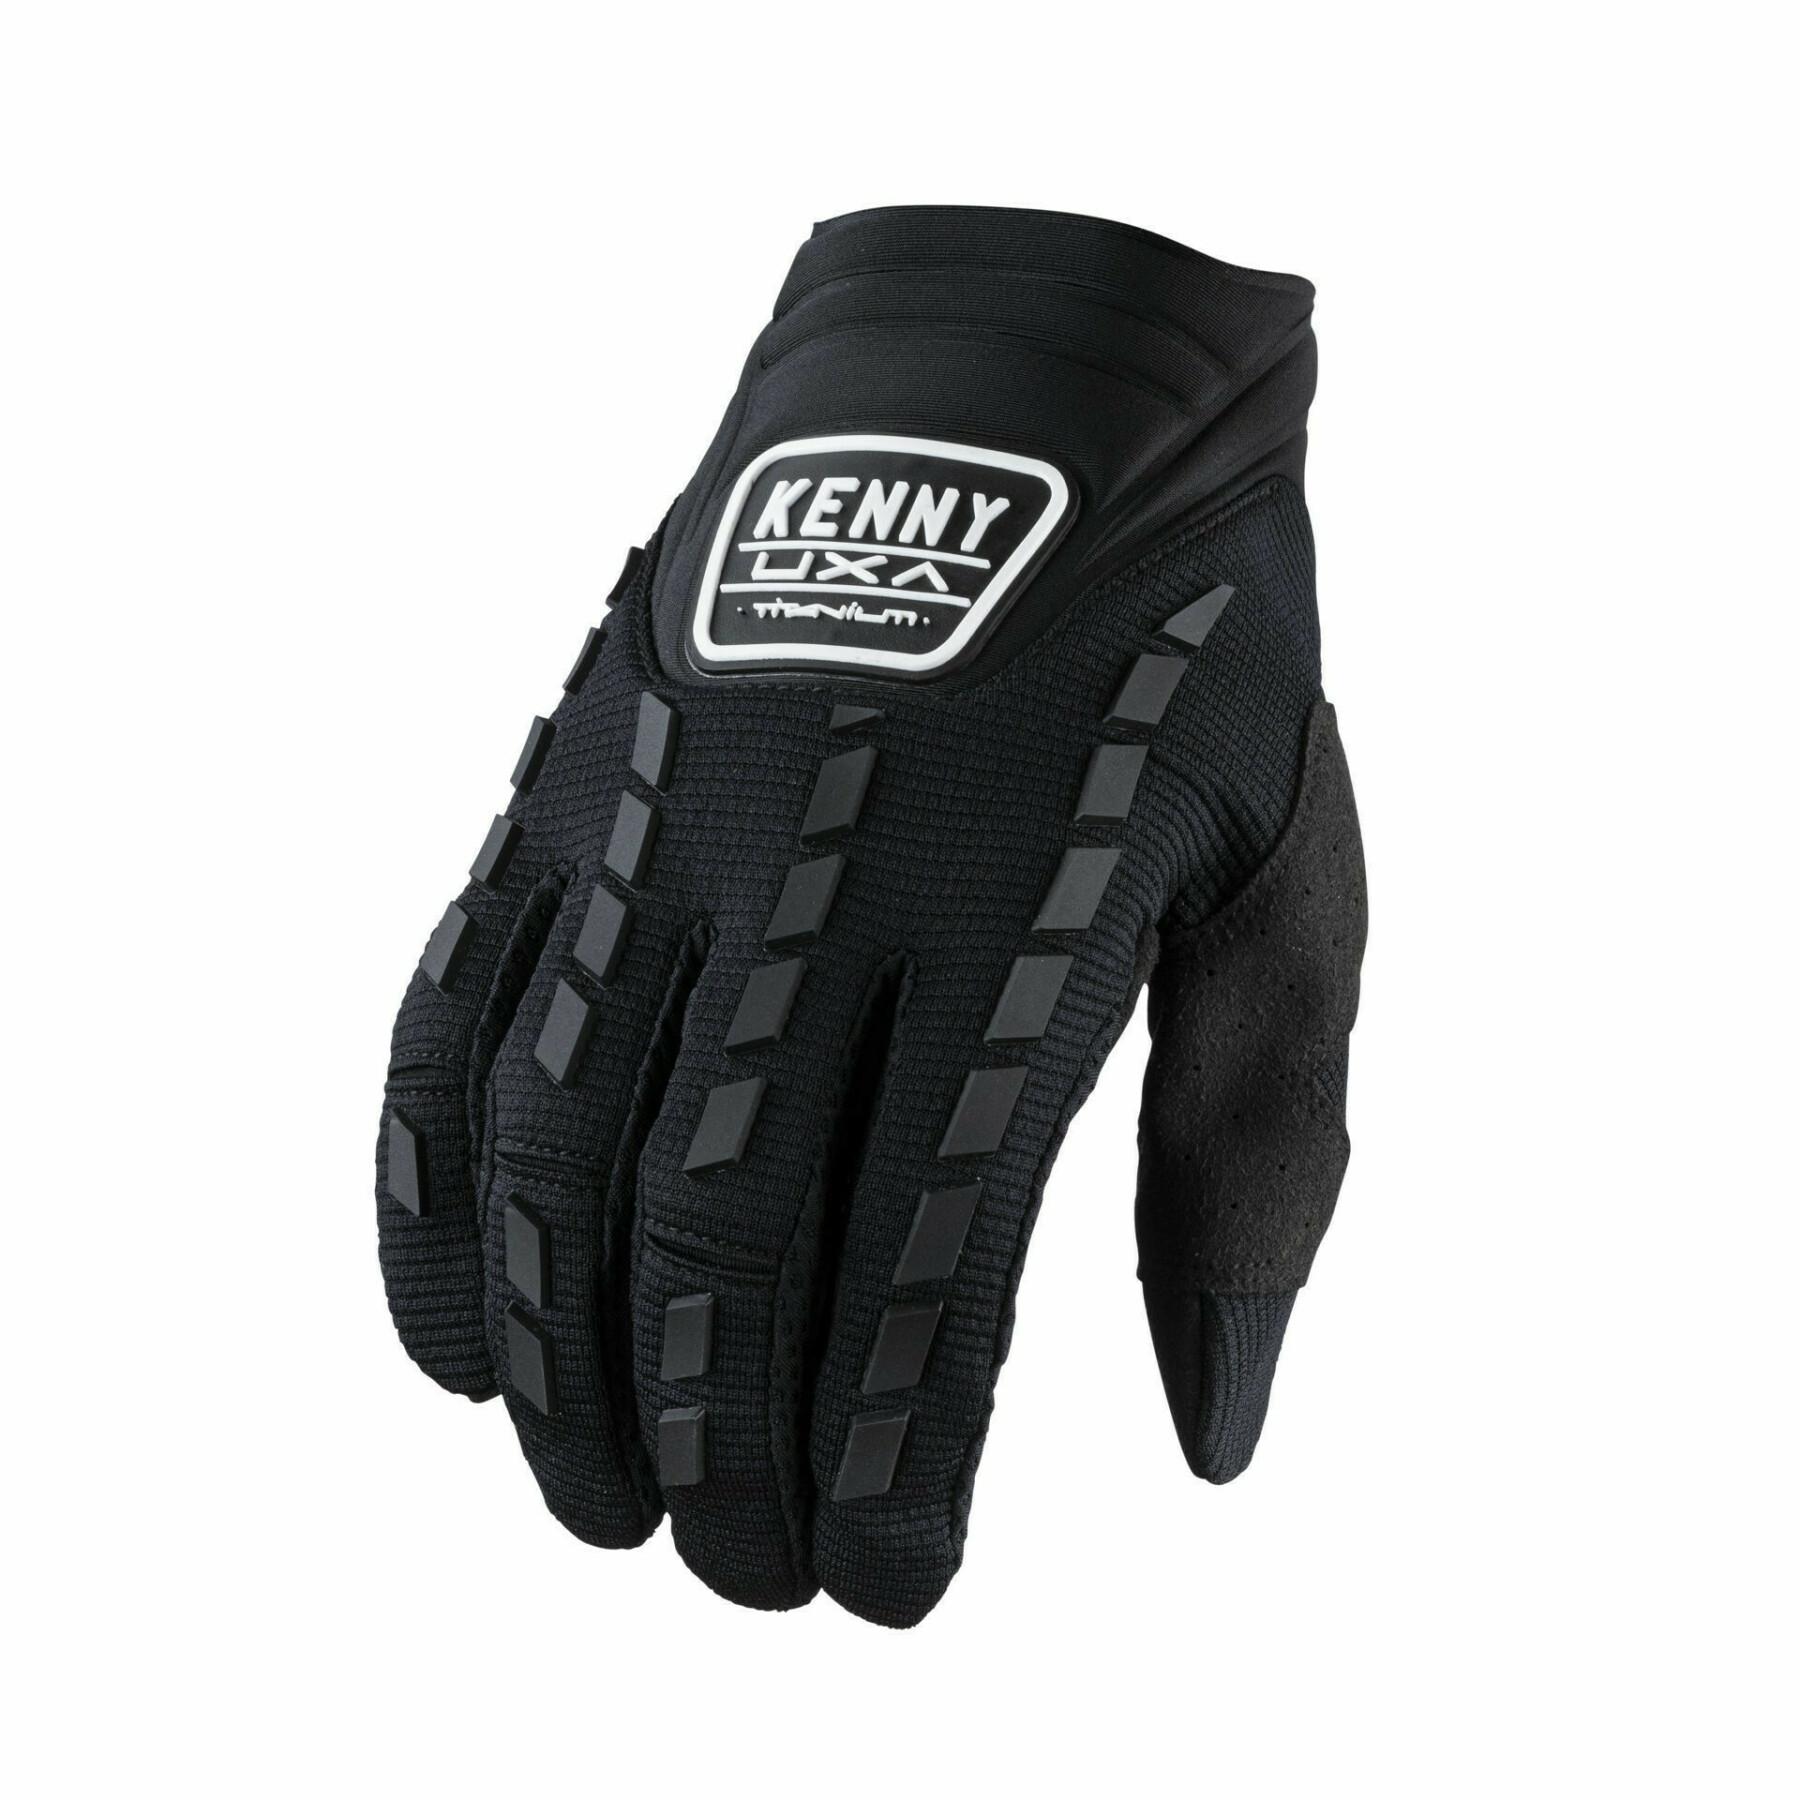 Motocross-Handschuhe Kenny titanium